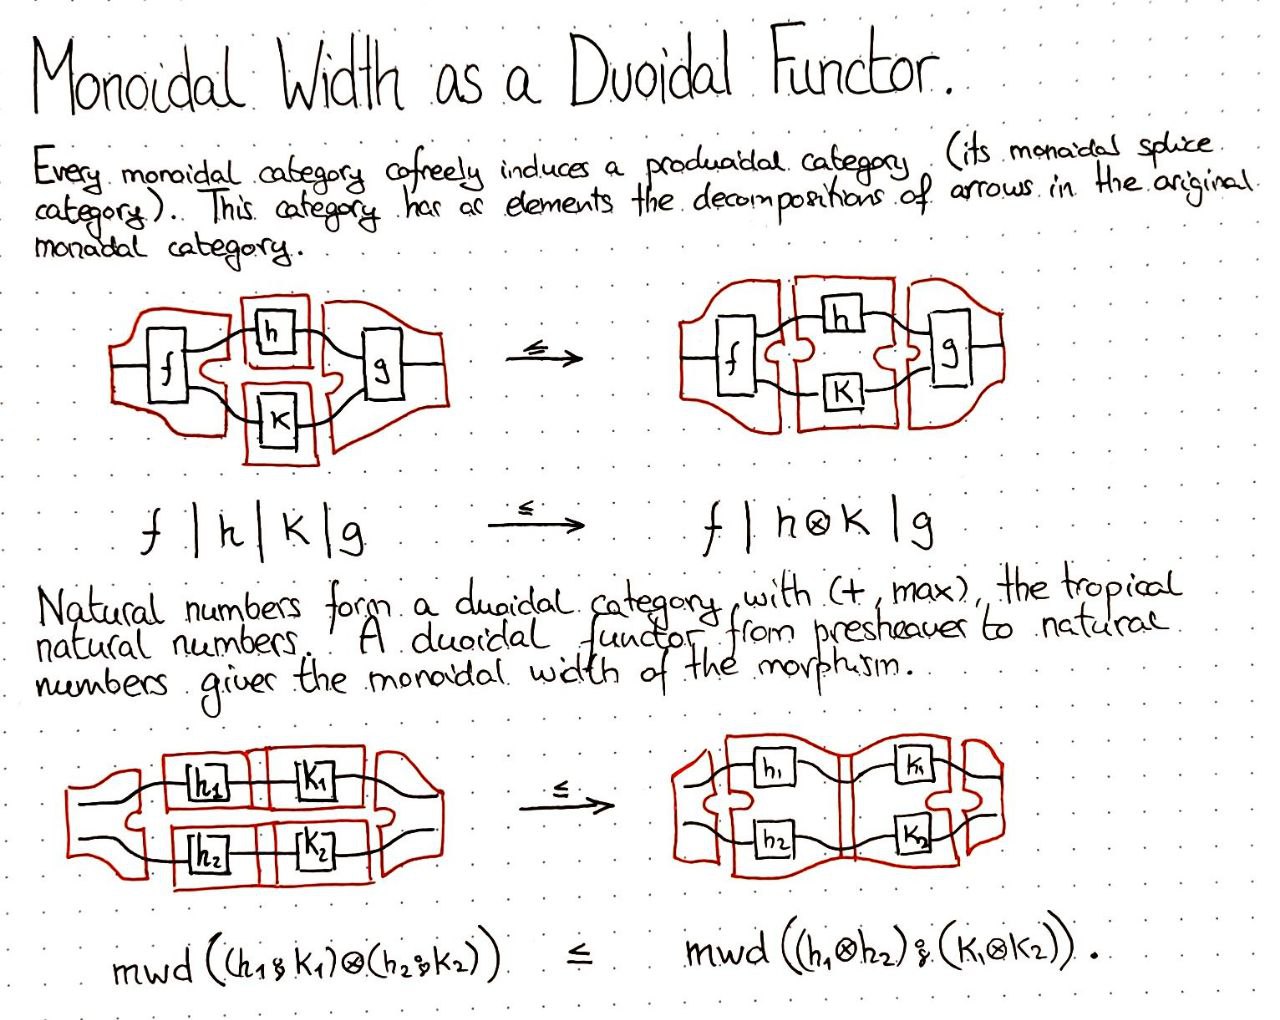 monoidal-width-as-a-duoidal-functor